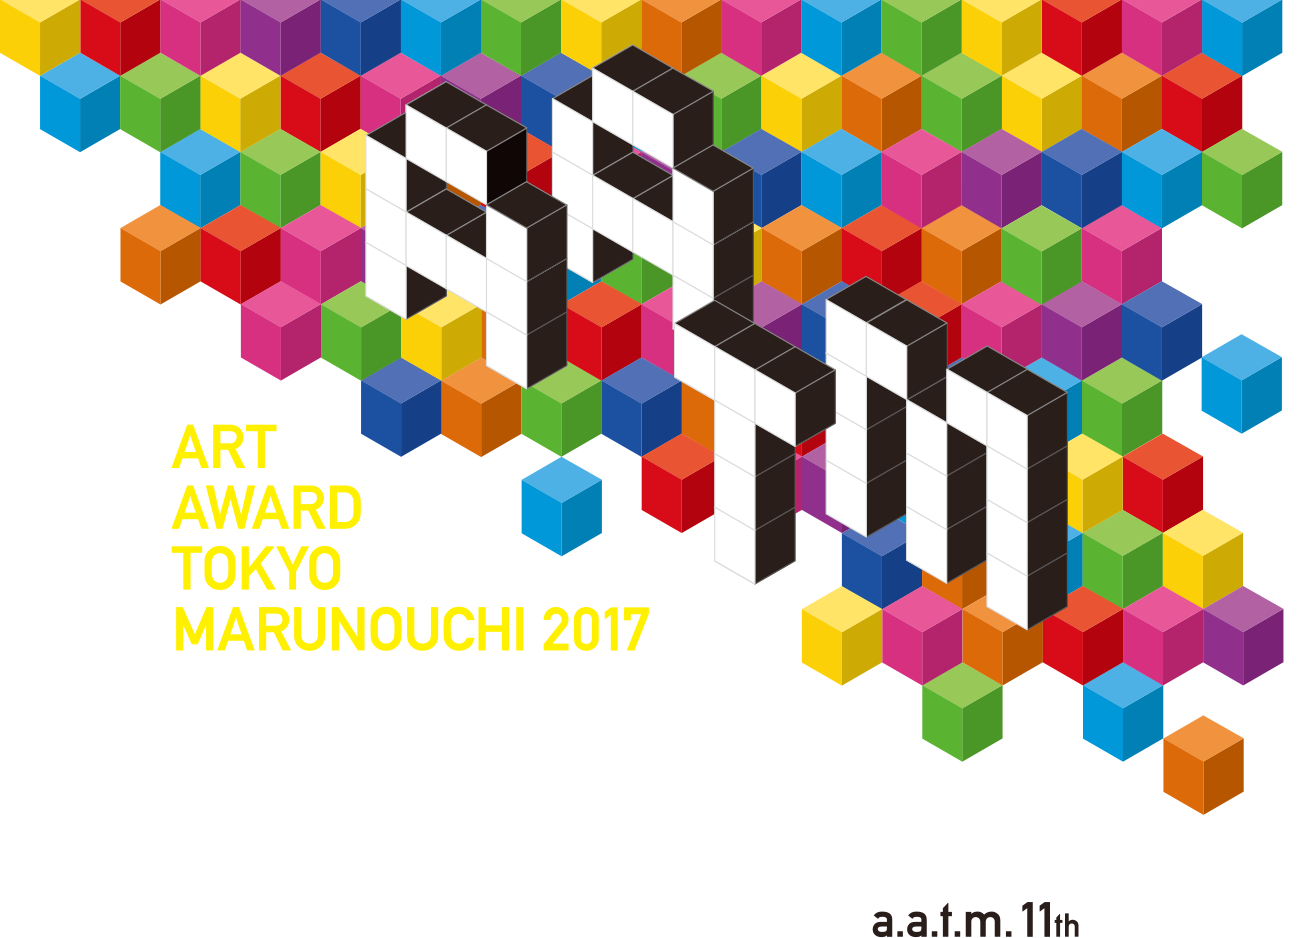 ART AWARD TOKYO MARUNOUCHI 2017